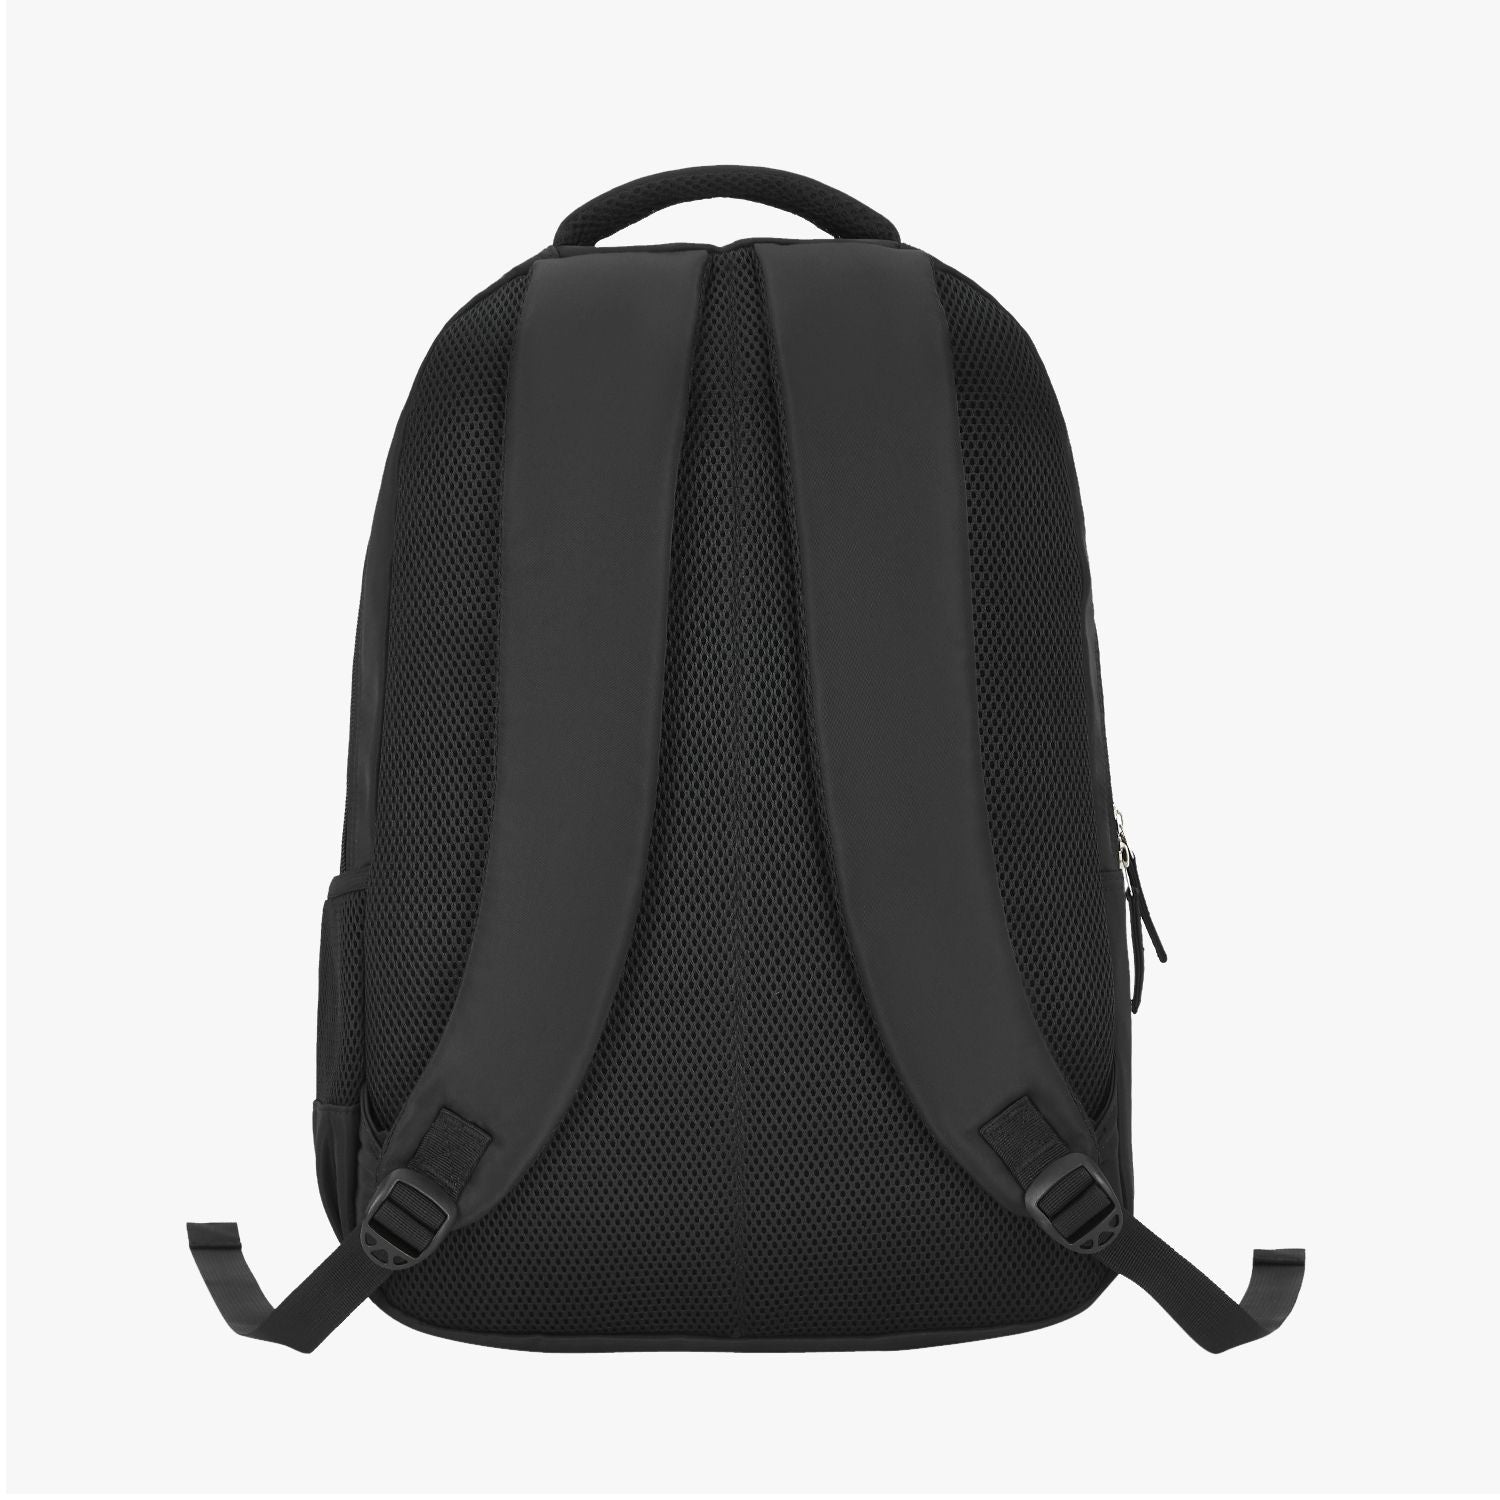 Zim Zam Laptop Backpack - Black